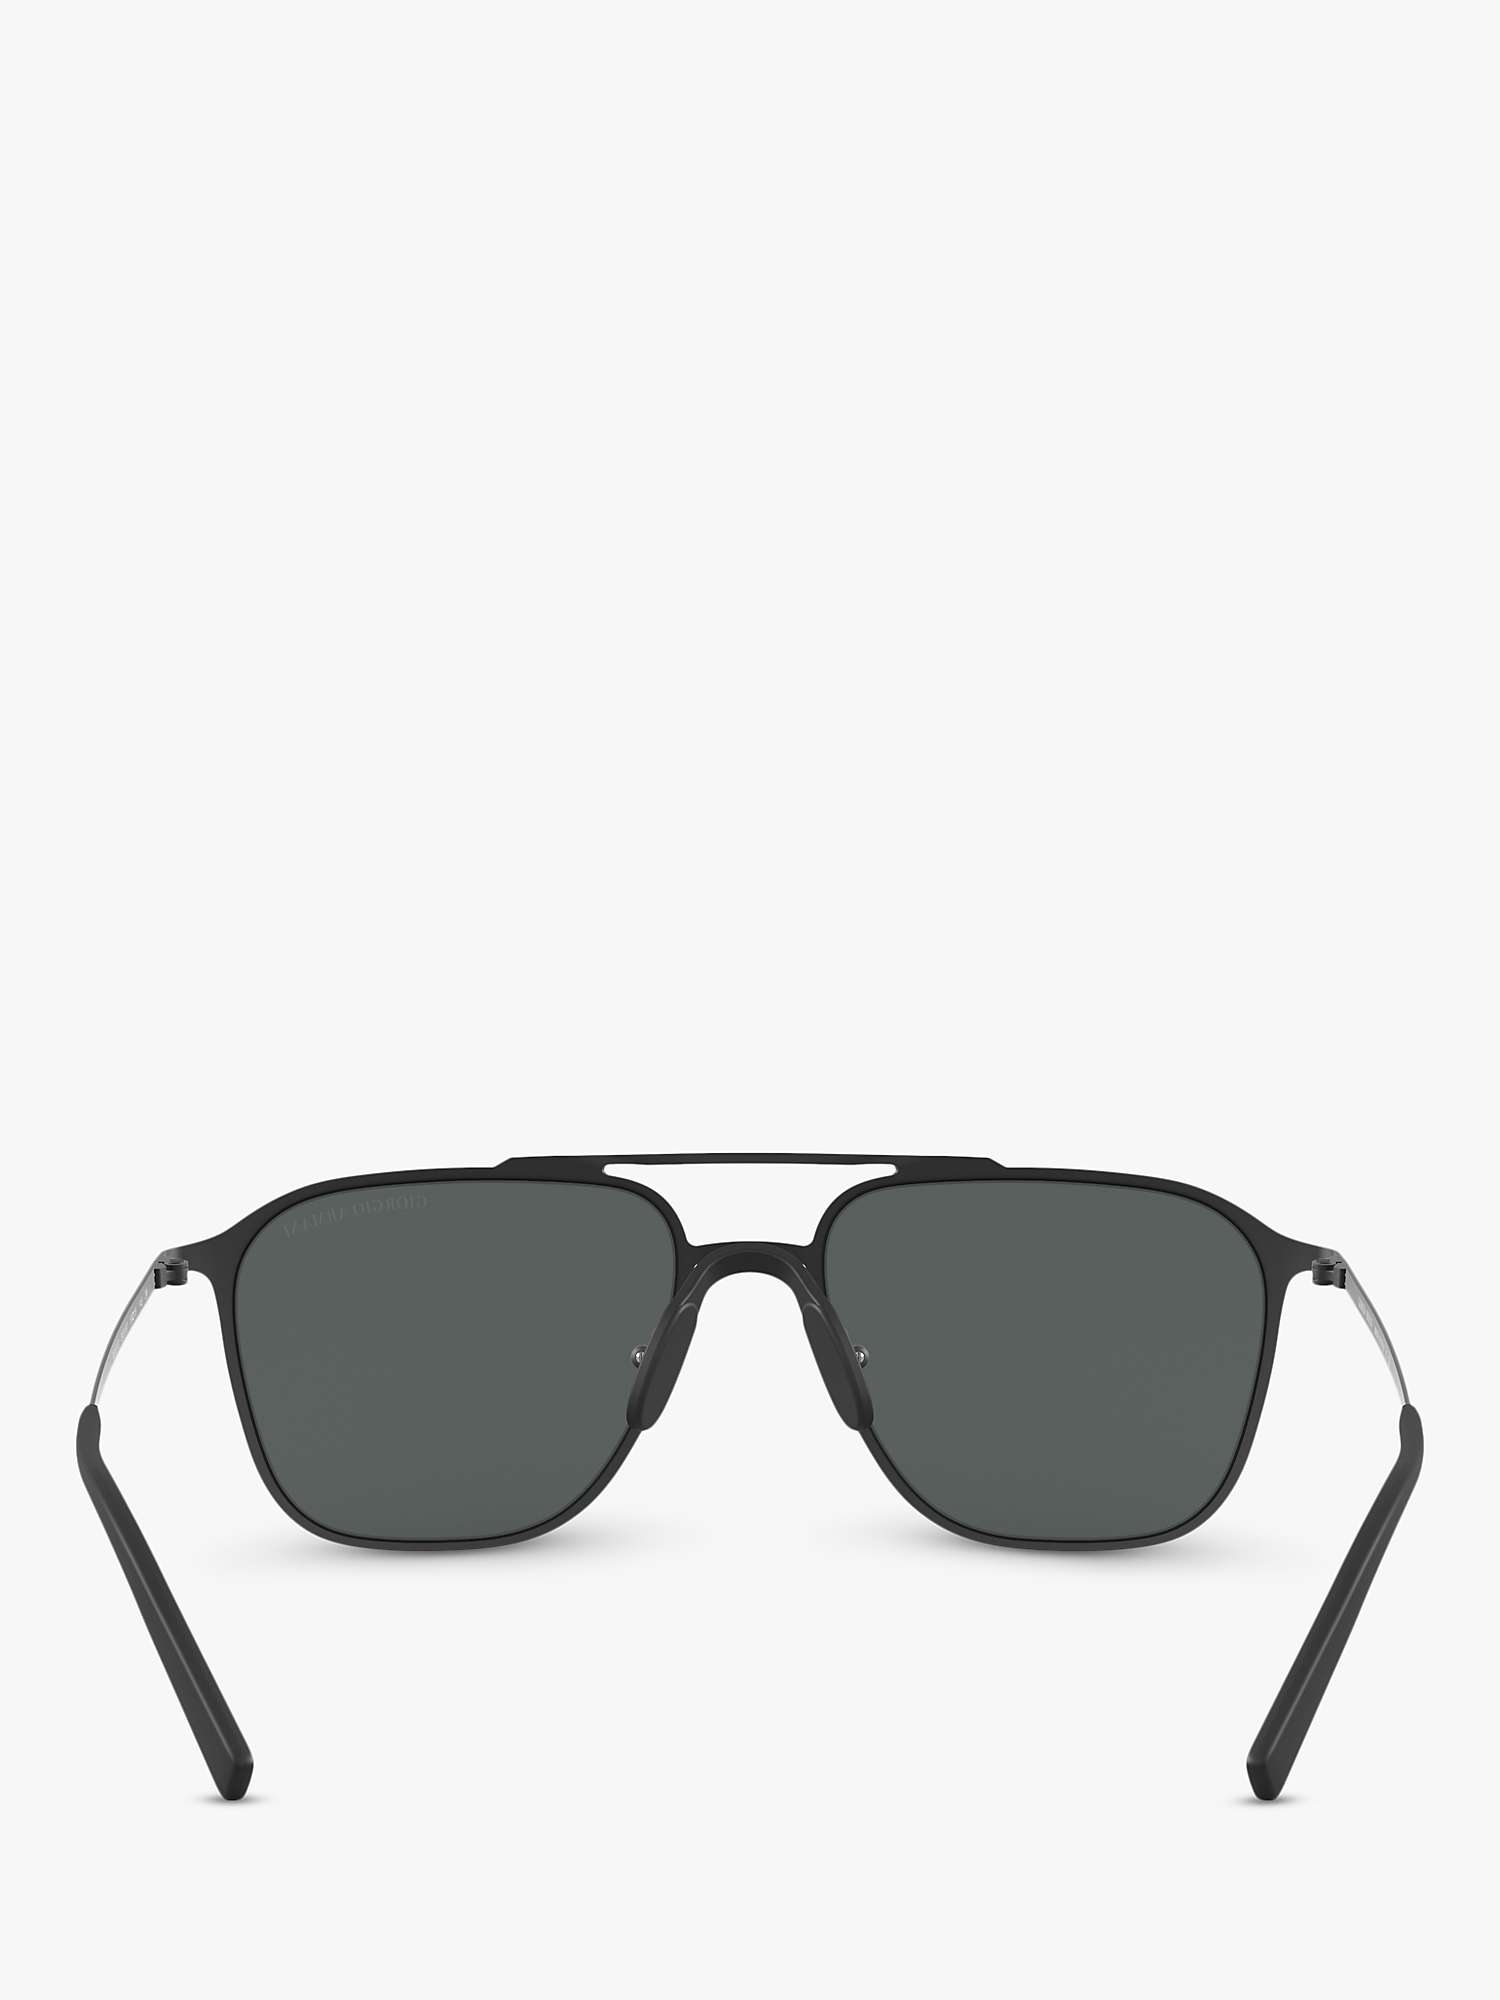 Buy Giorgio Armani AR6110 Men's Square Sunglasses Online at johnlewis.com